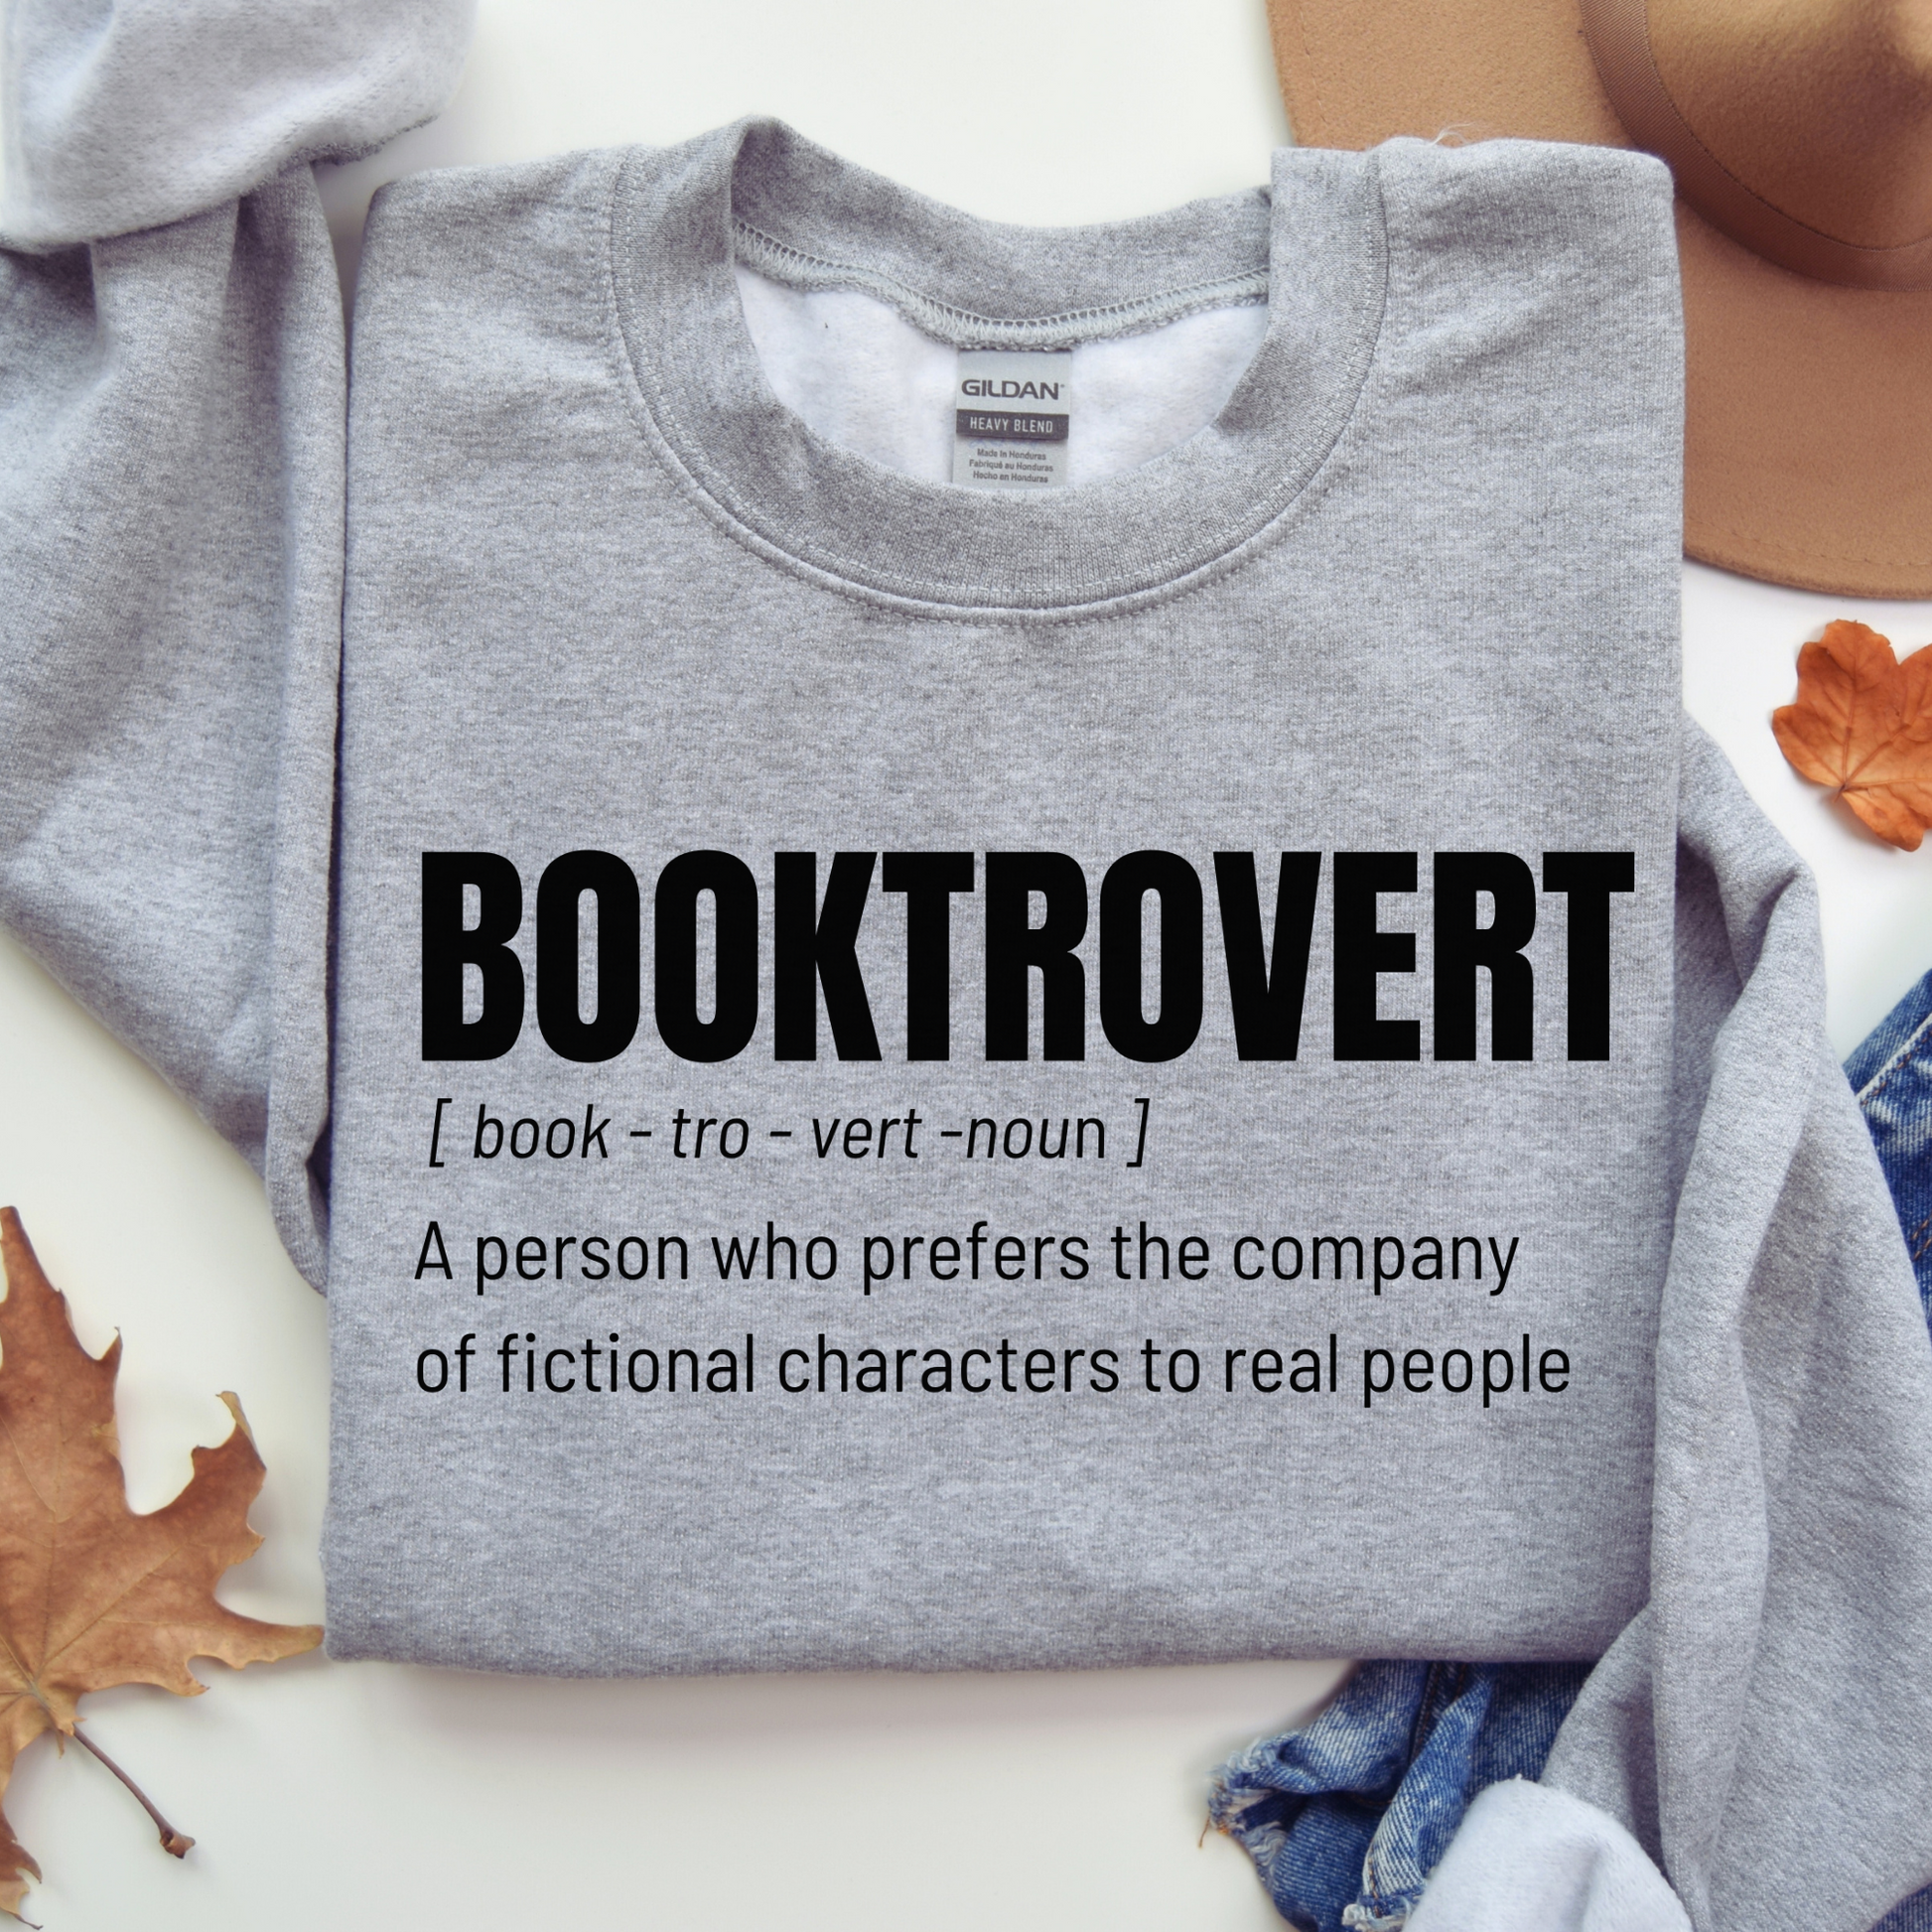 Booktrovert Sweatshirt - The Glam Thangz